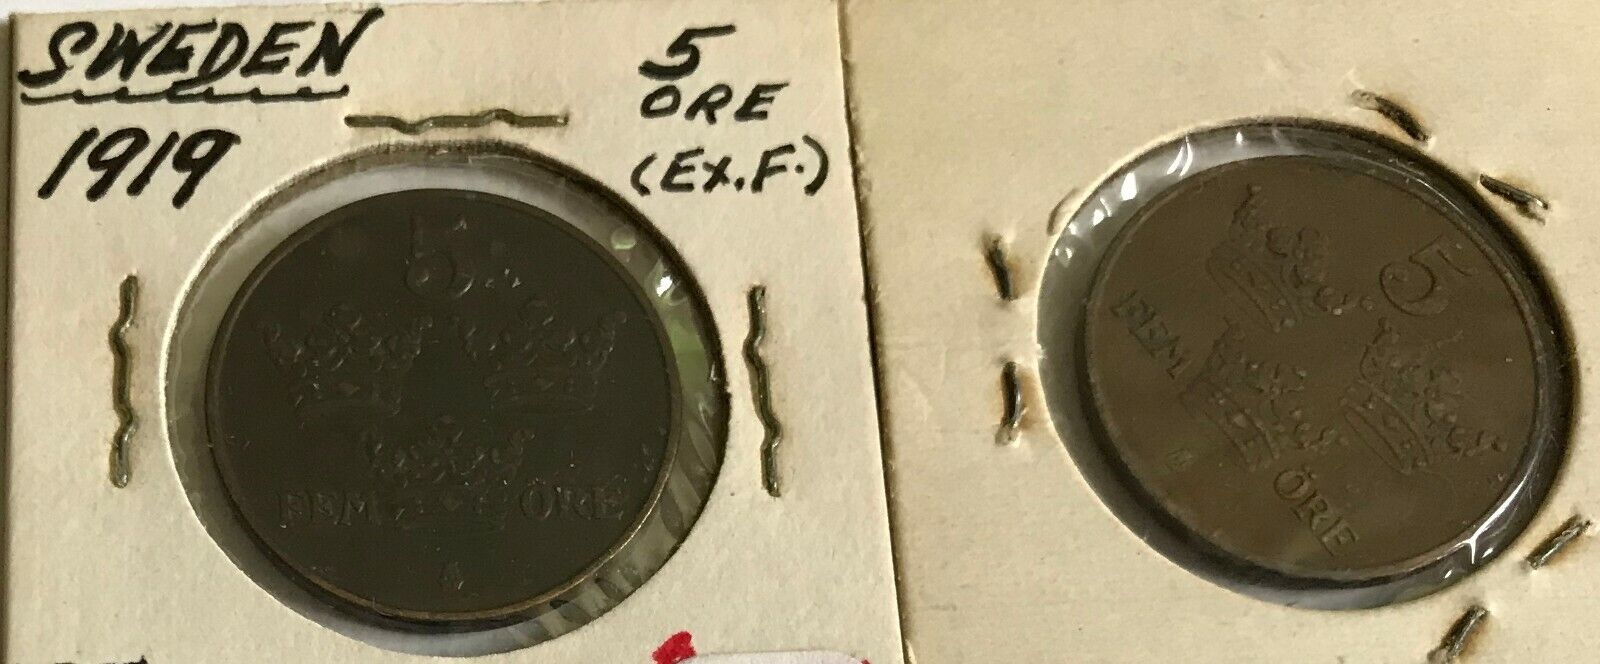 Sweden - lot of 2 coins - 5 ORE - 1919 EF & 1921 AU Без бренда - фотография #2